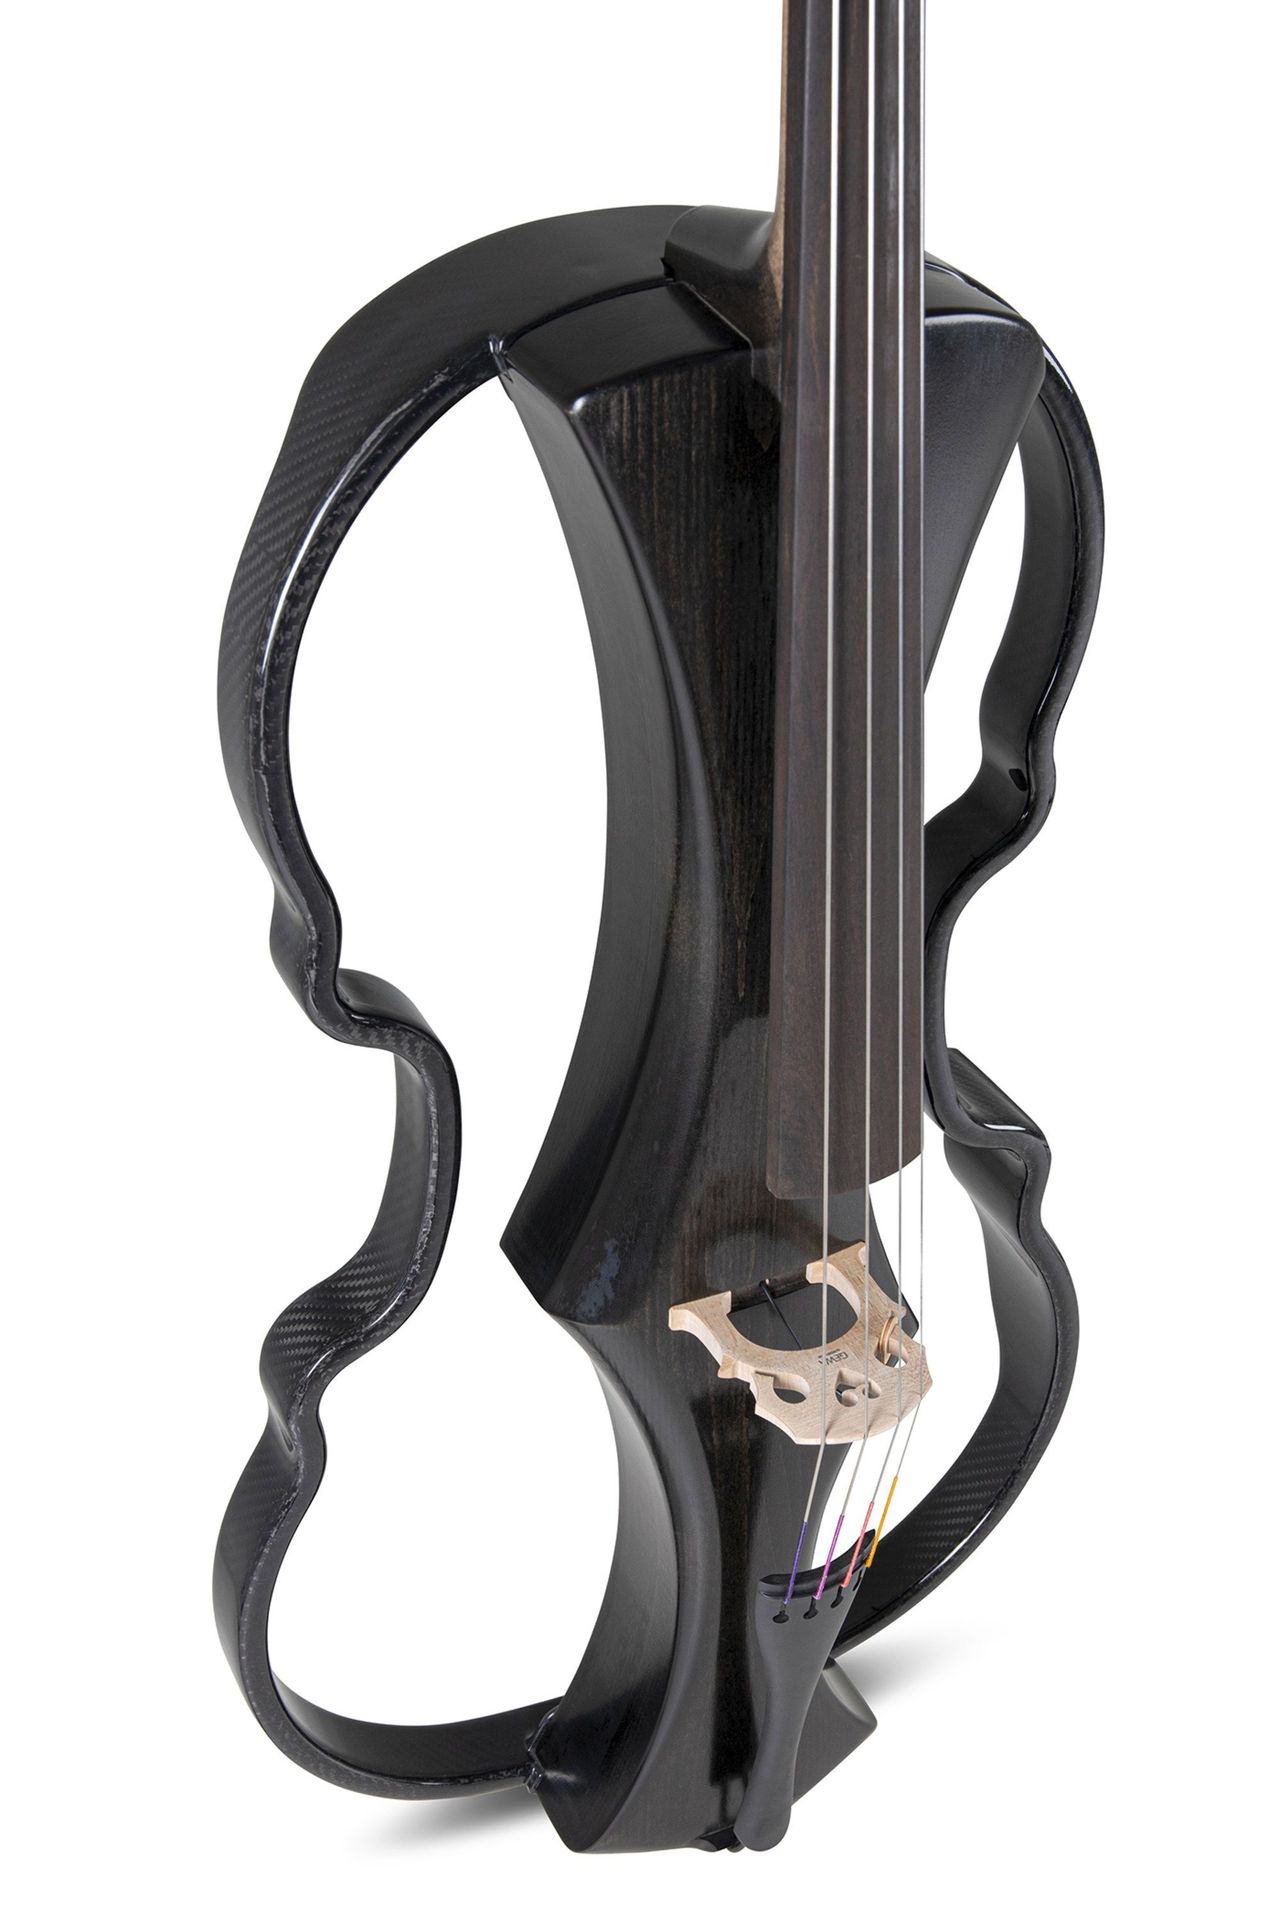 GEWA E-Cello NOVITA 3.0 Farbe schwarz